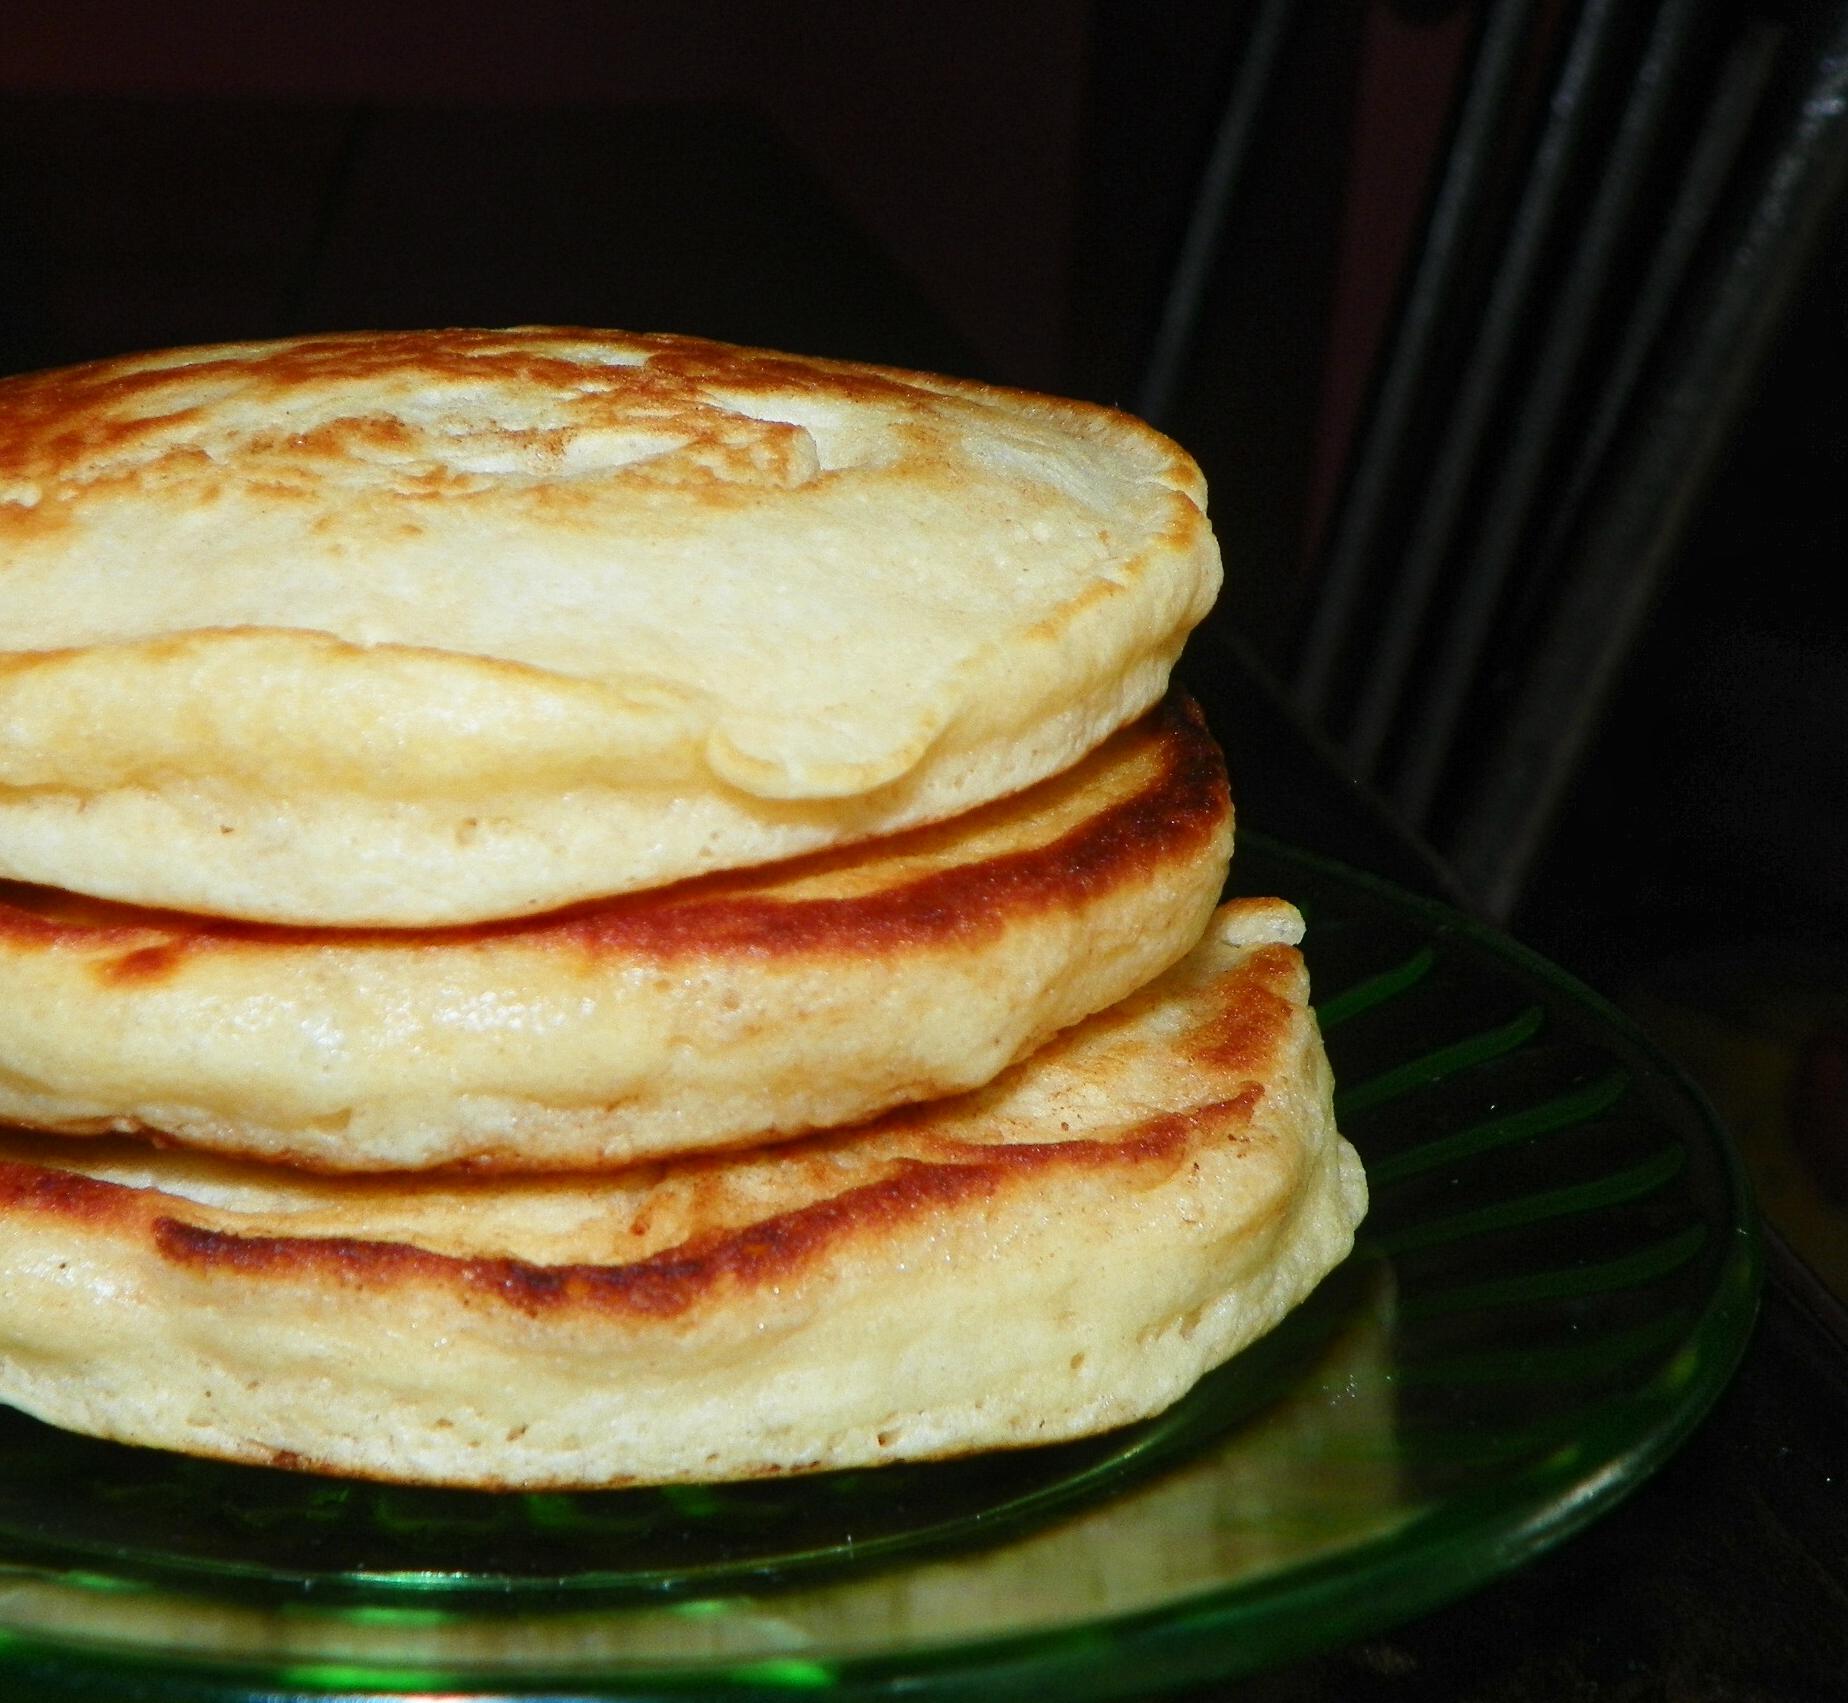  Fluffy, golden pancakes infused with Baileys Irish Cream!